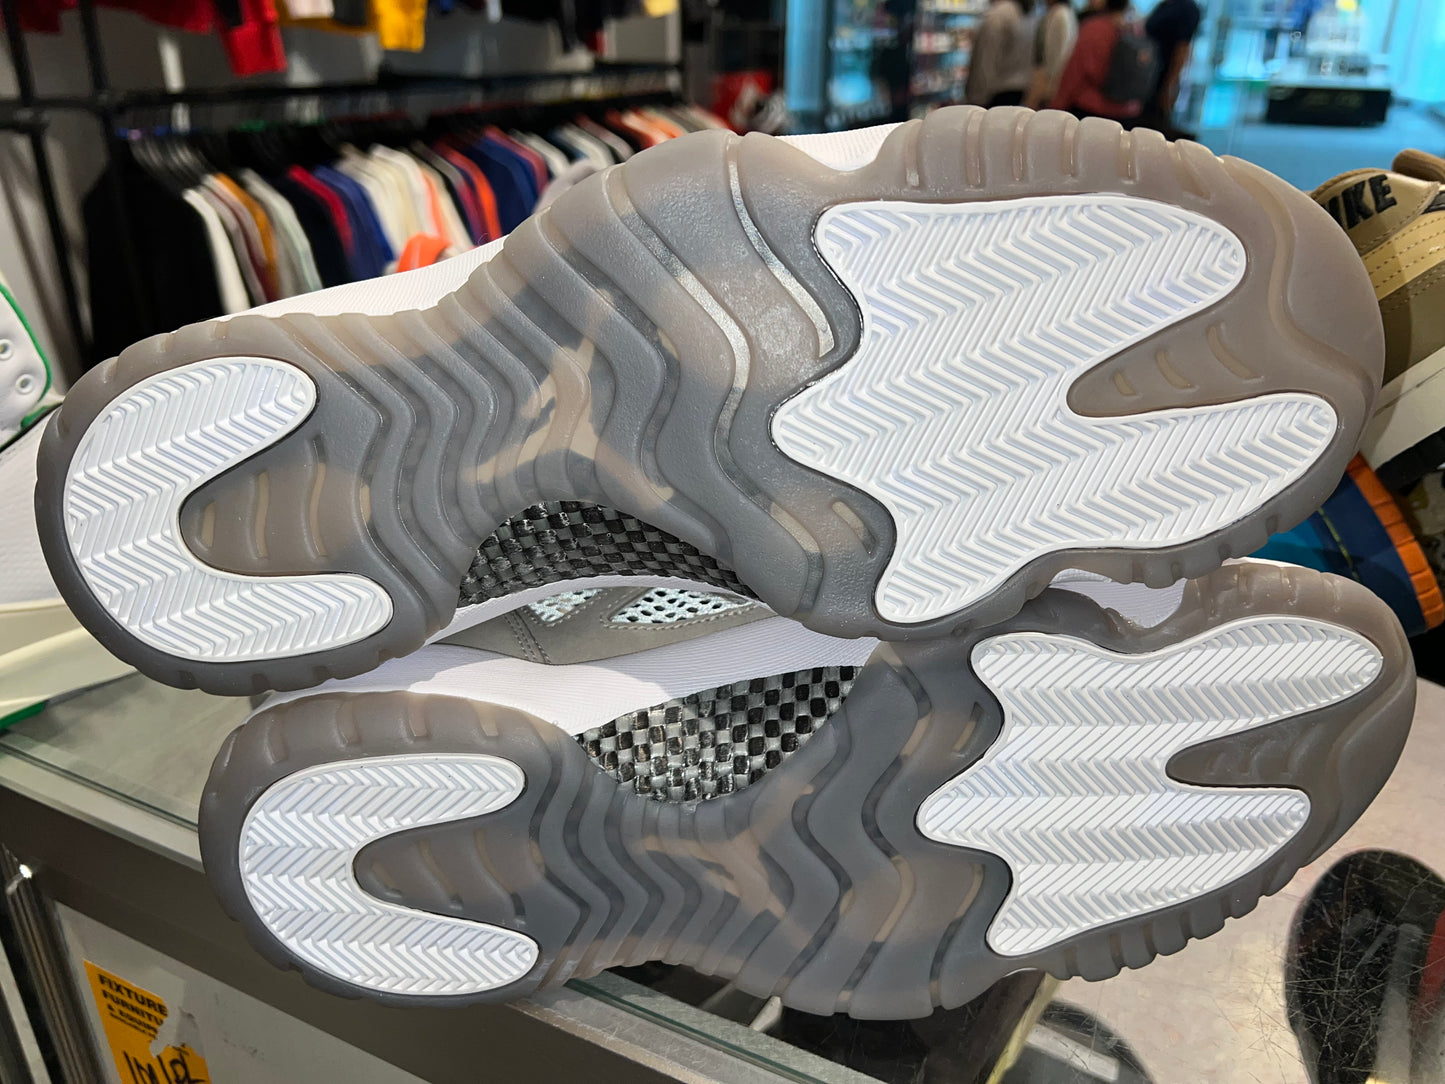 Size 14 Air Jordan 11 Low IE “Light Orewood Brown” Brand New (Mall)